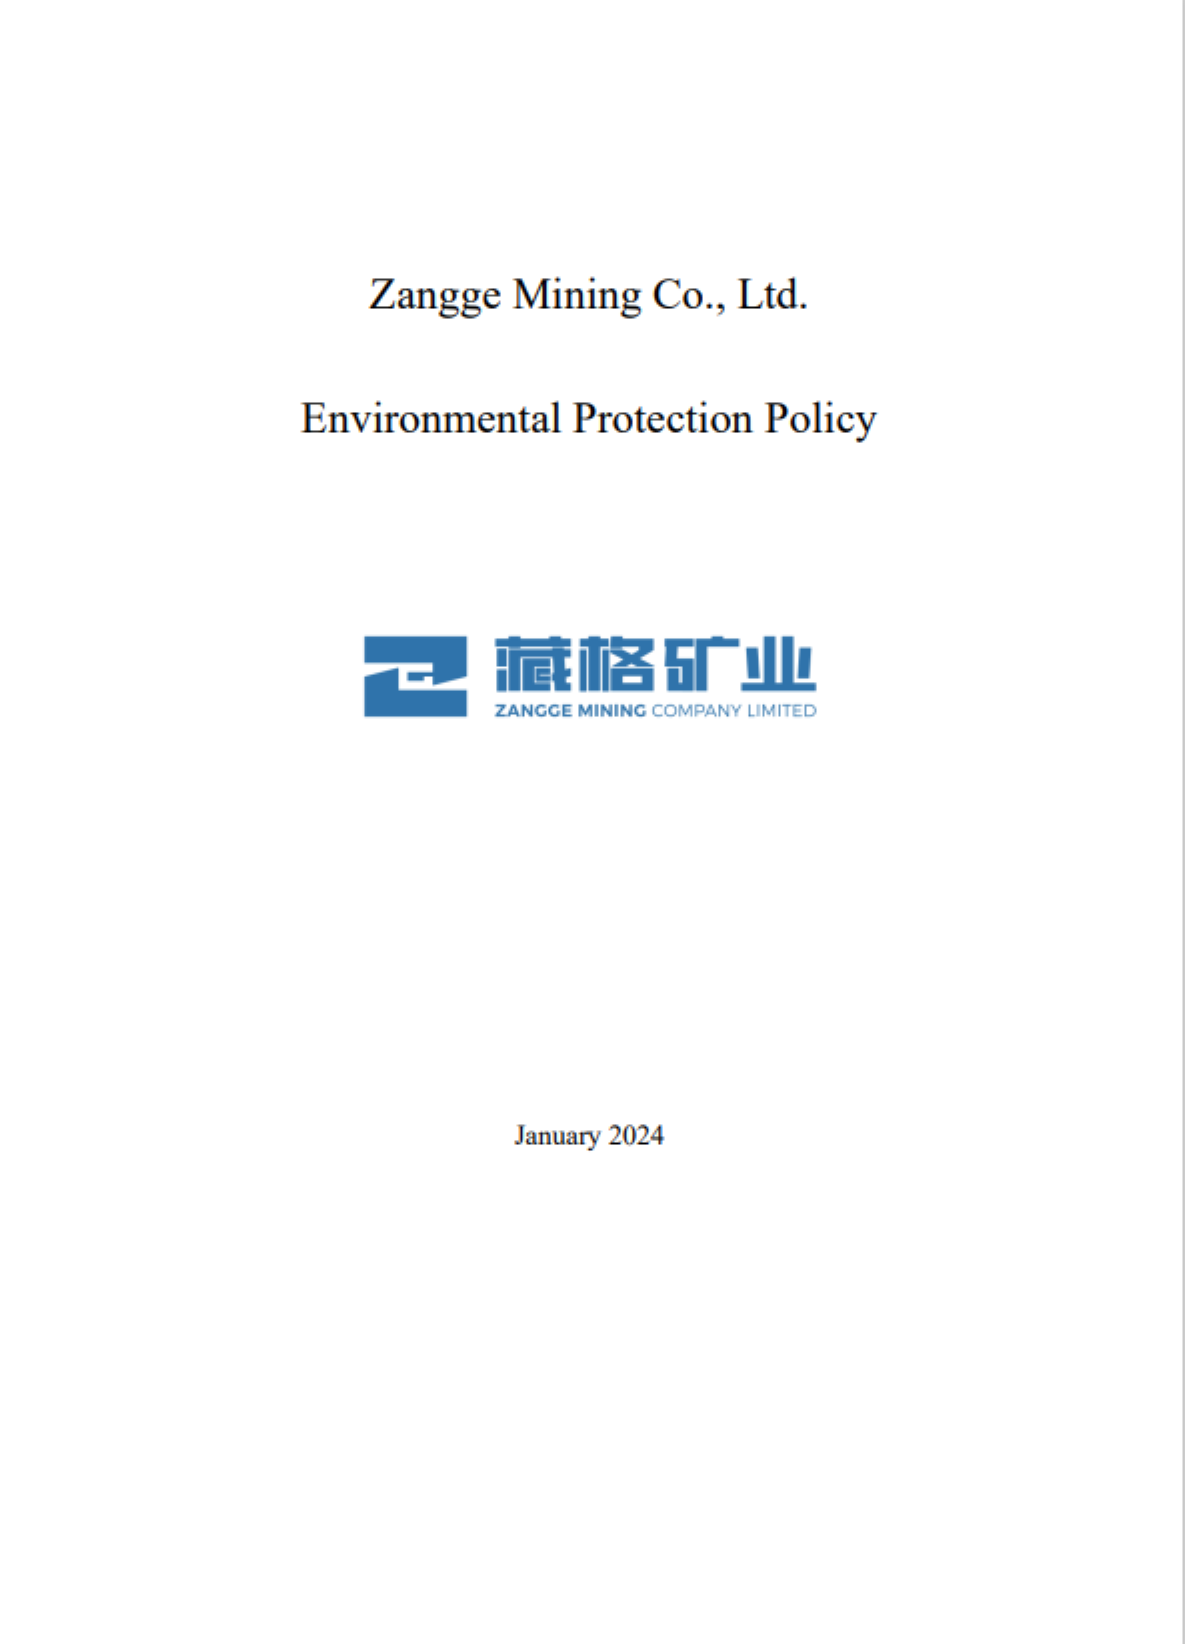 Environmental Protection Policy of Zangge Mining Co., Ltd.